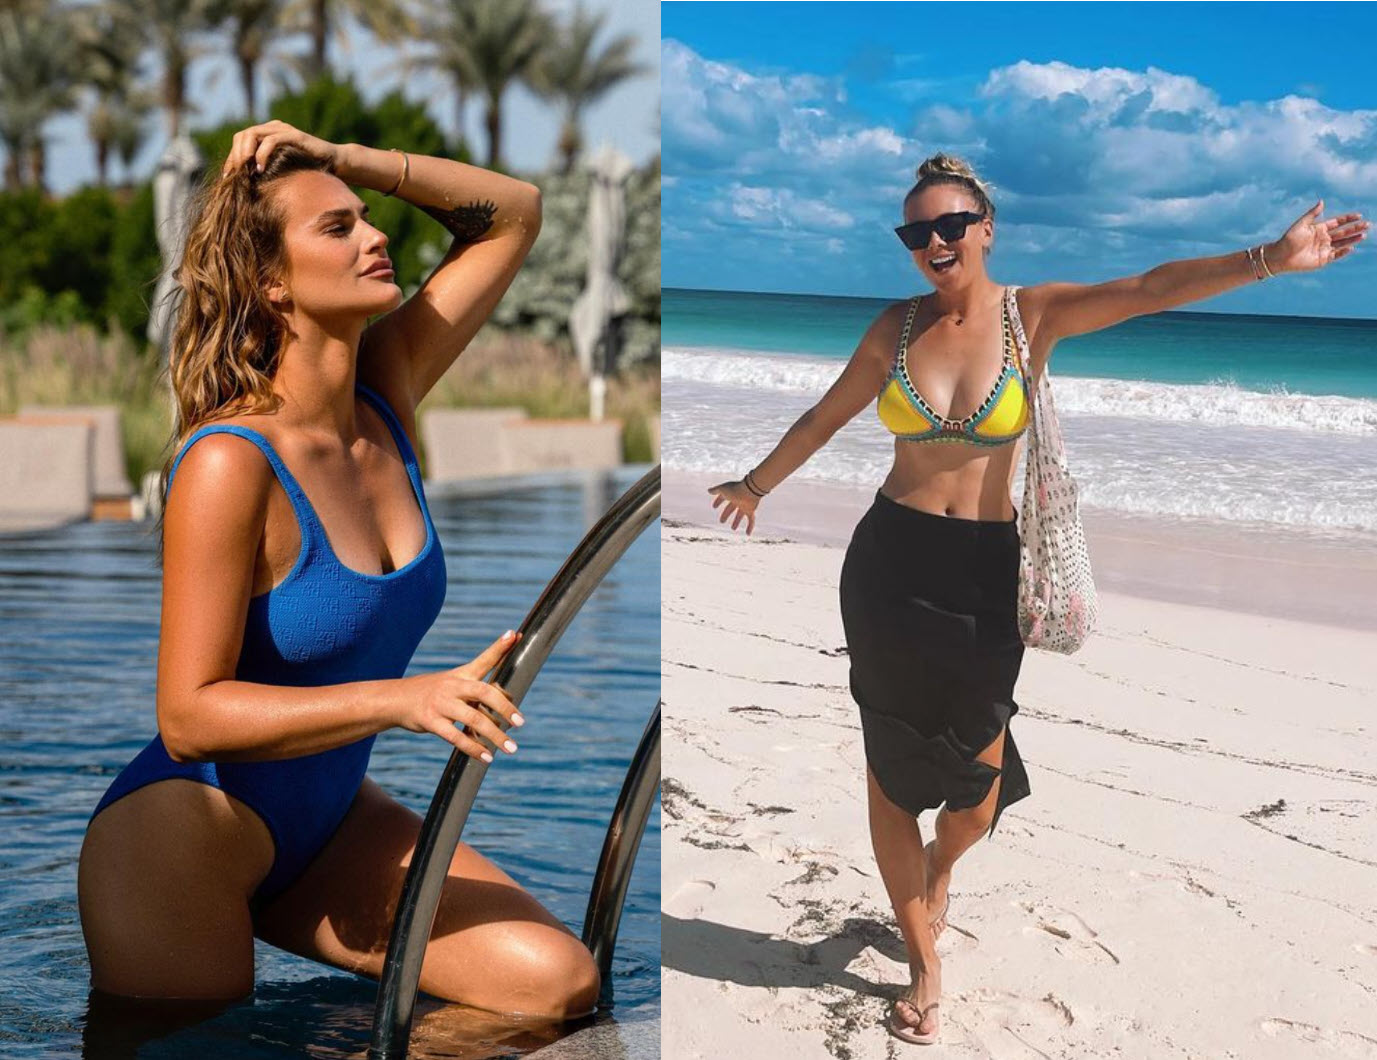 Sabalenka, Anisimova hot and top pictures ina bikini at the beach. About their boyfriends…